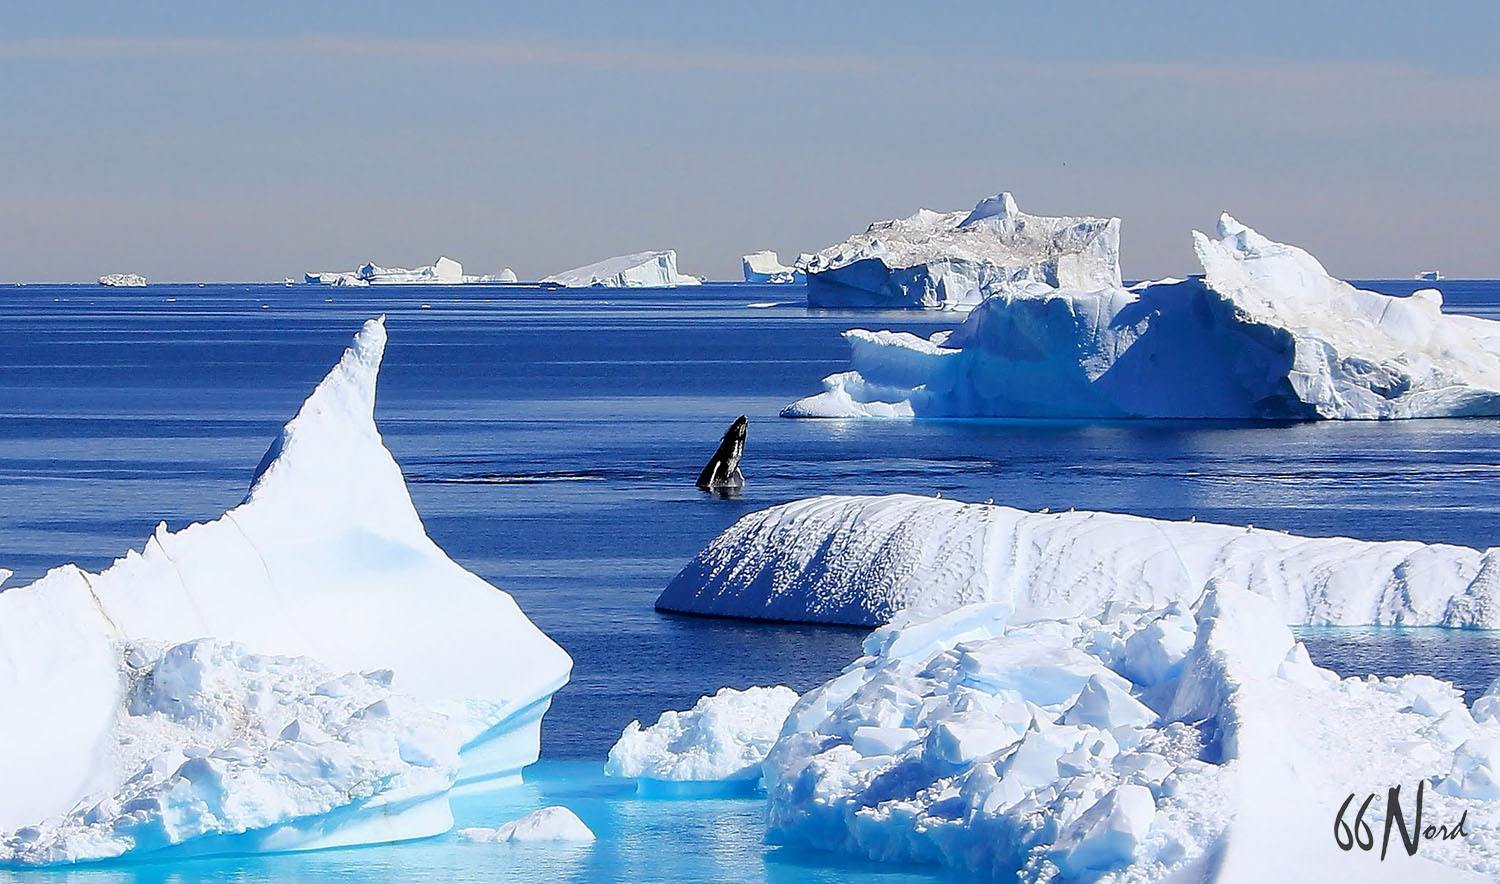 baleine au groenland au milieu des icebergs 66°Nord